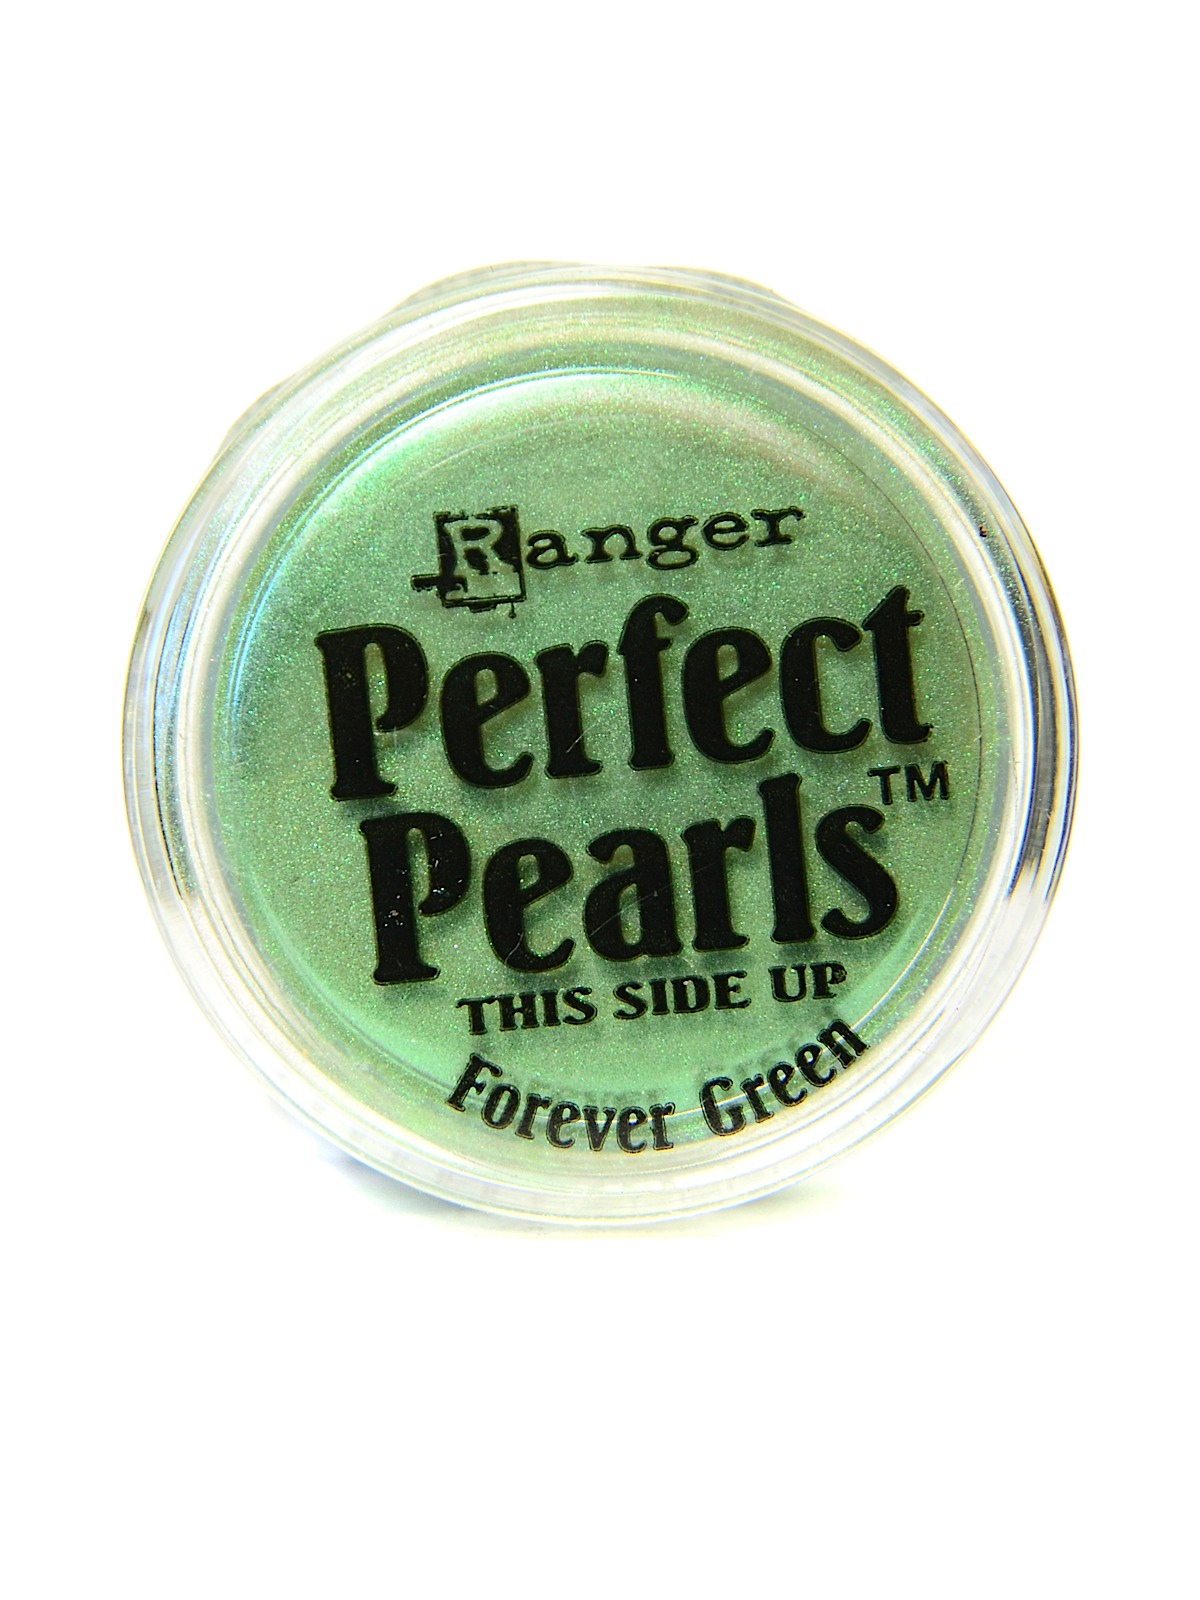 Mint Ranger Perfect Pearls Pigment Powder 0.25oz 